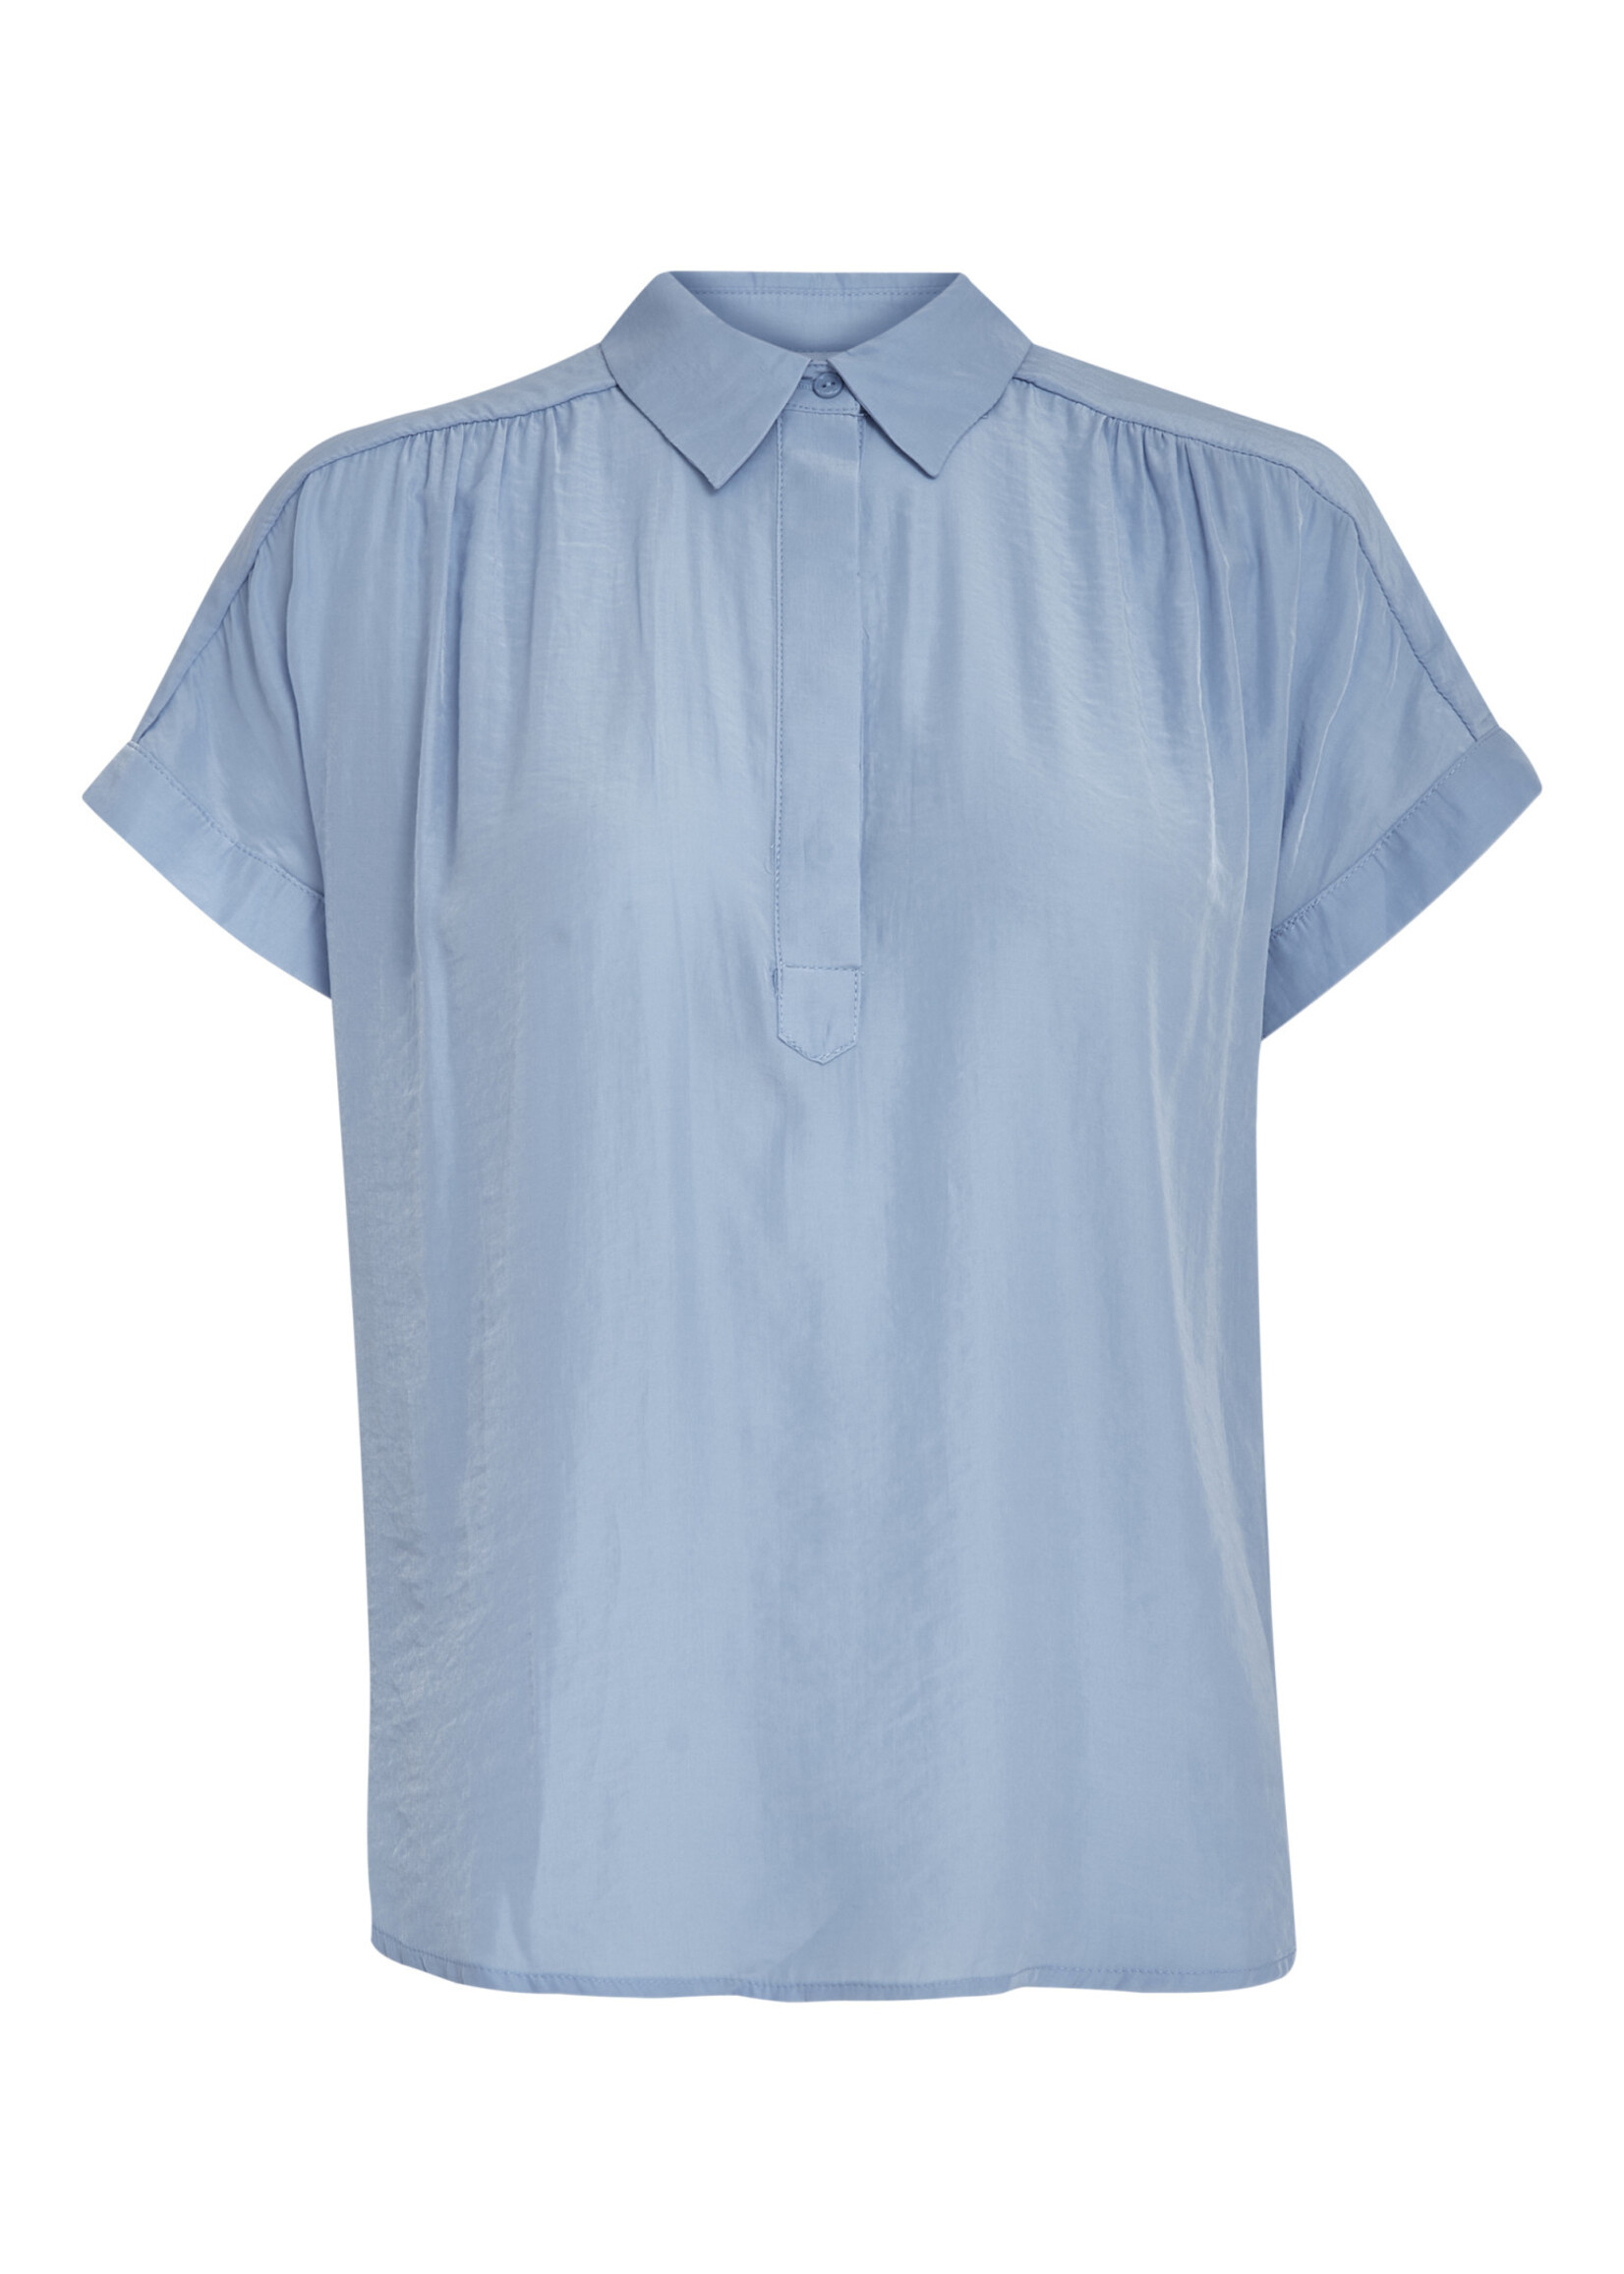 Minus Minus, MSAyame Short Sleeve Blouse, Vista Blue, Size: